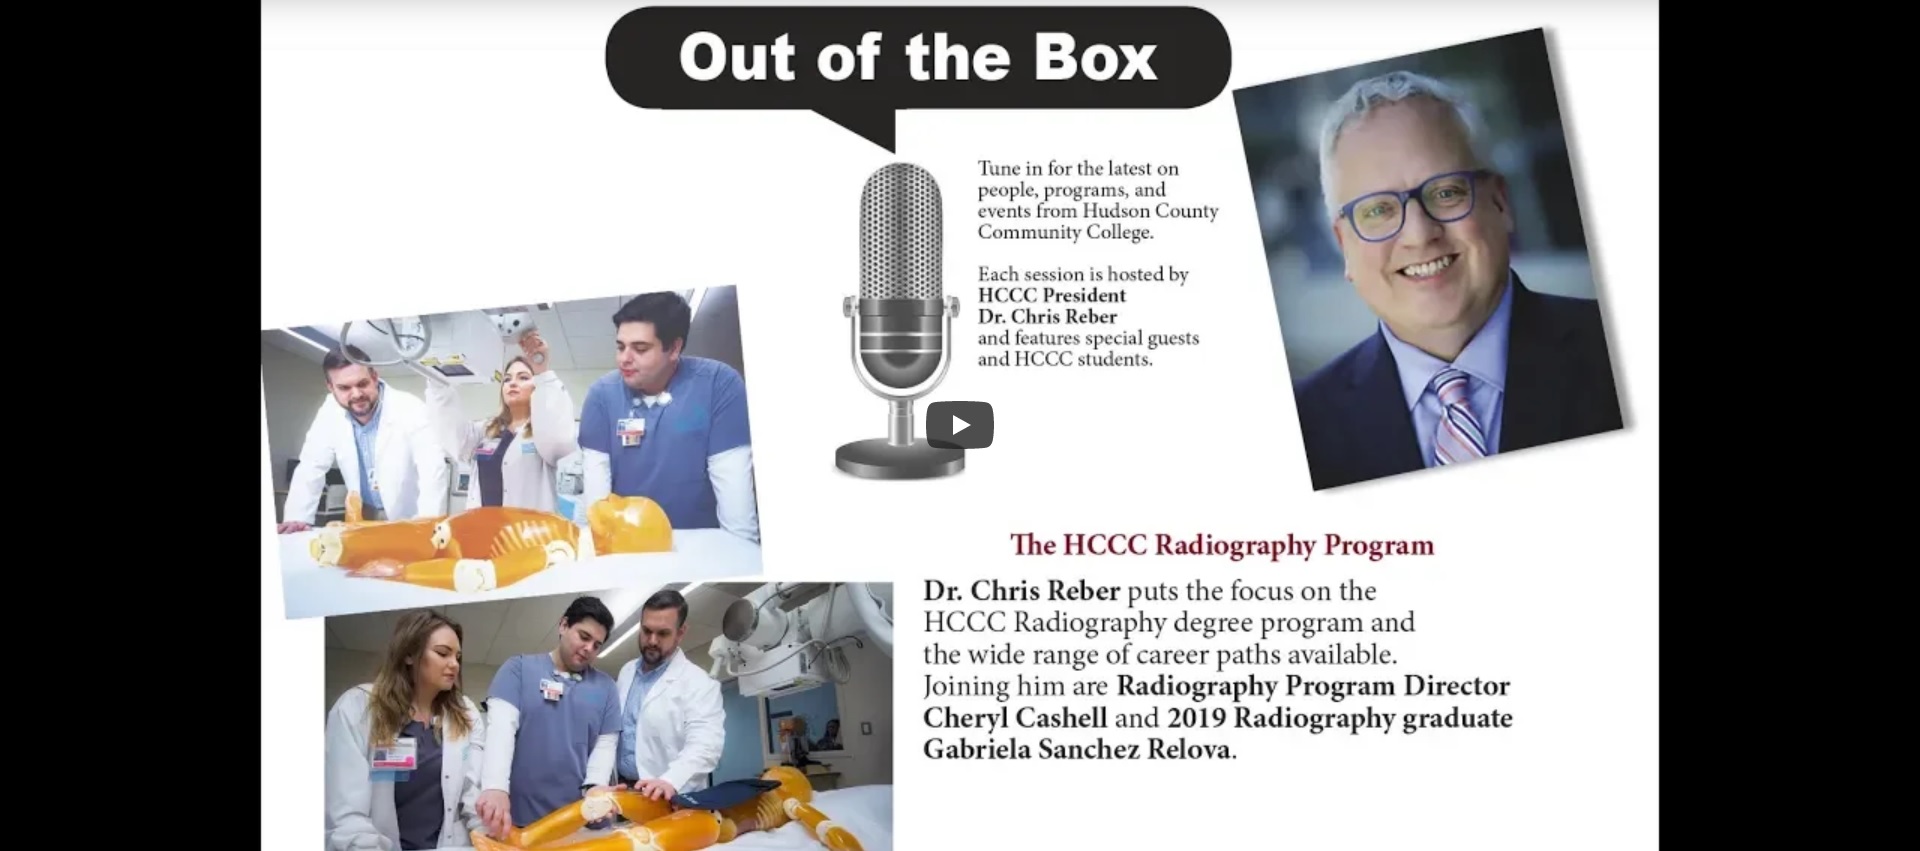 The HCCC Radiography Program